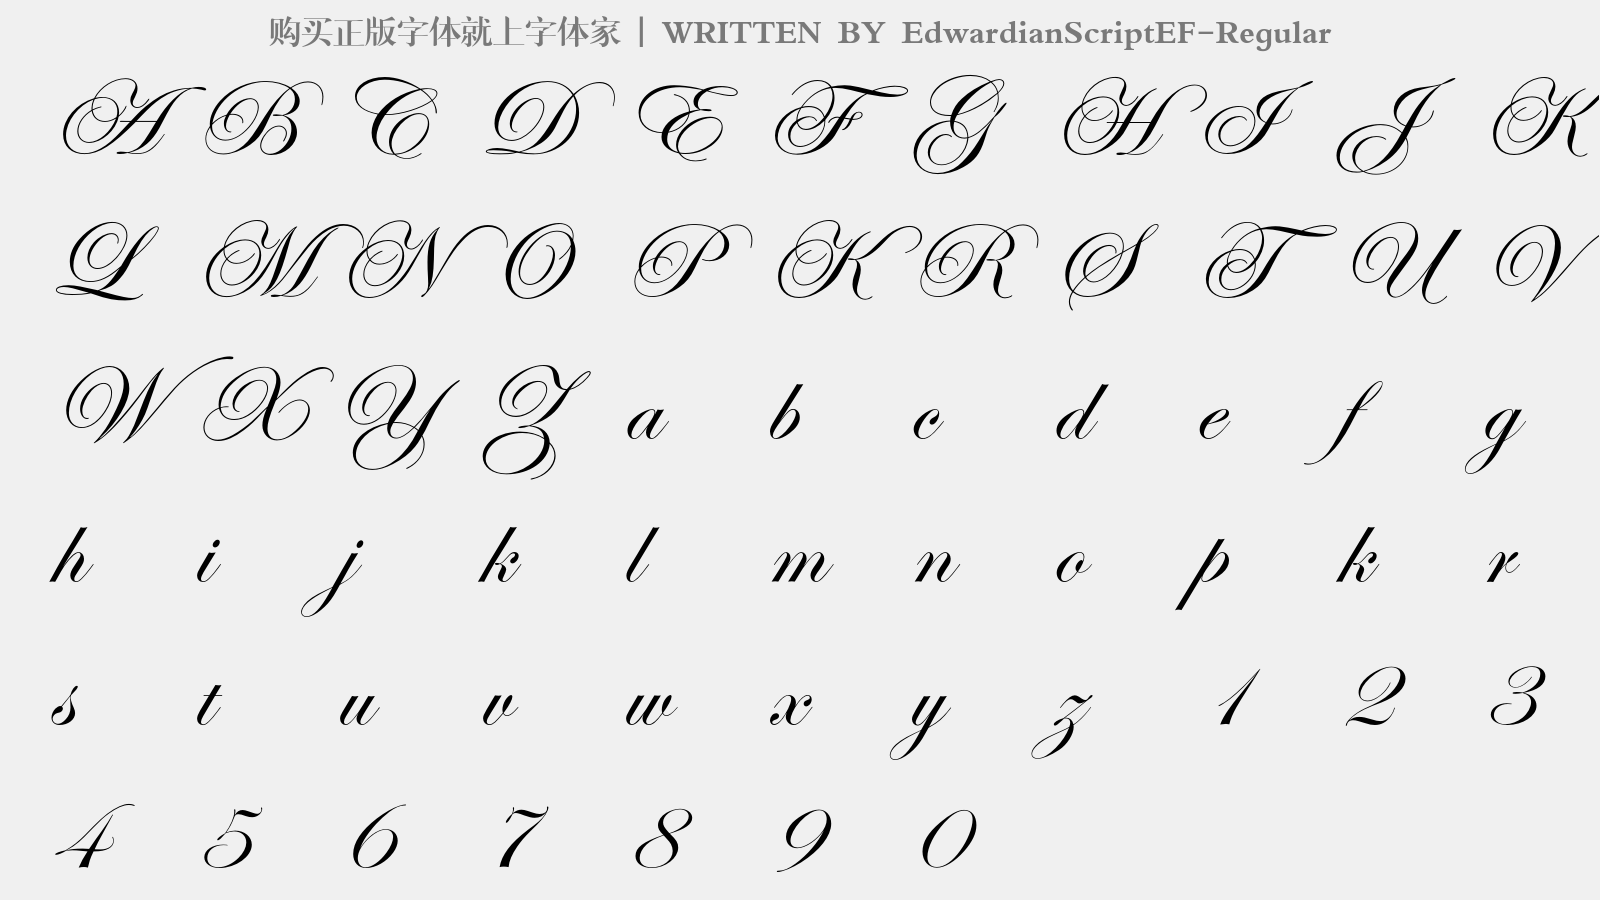 EdwardianScriptEF-Regular - 大写字母/小写字母/数字